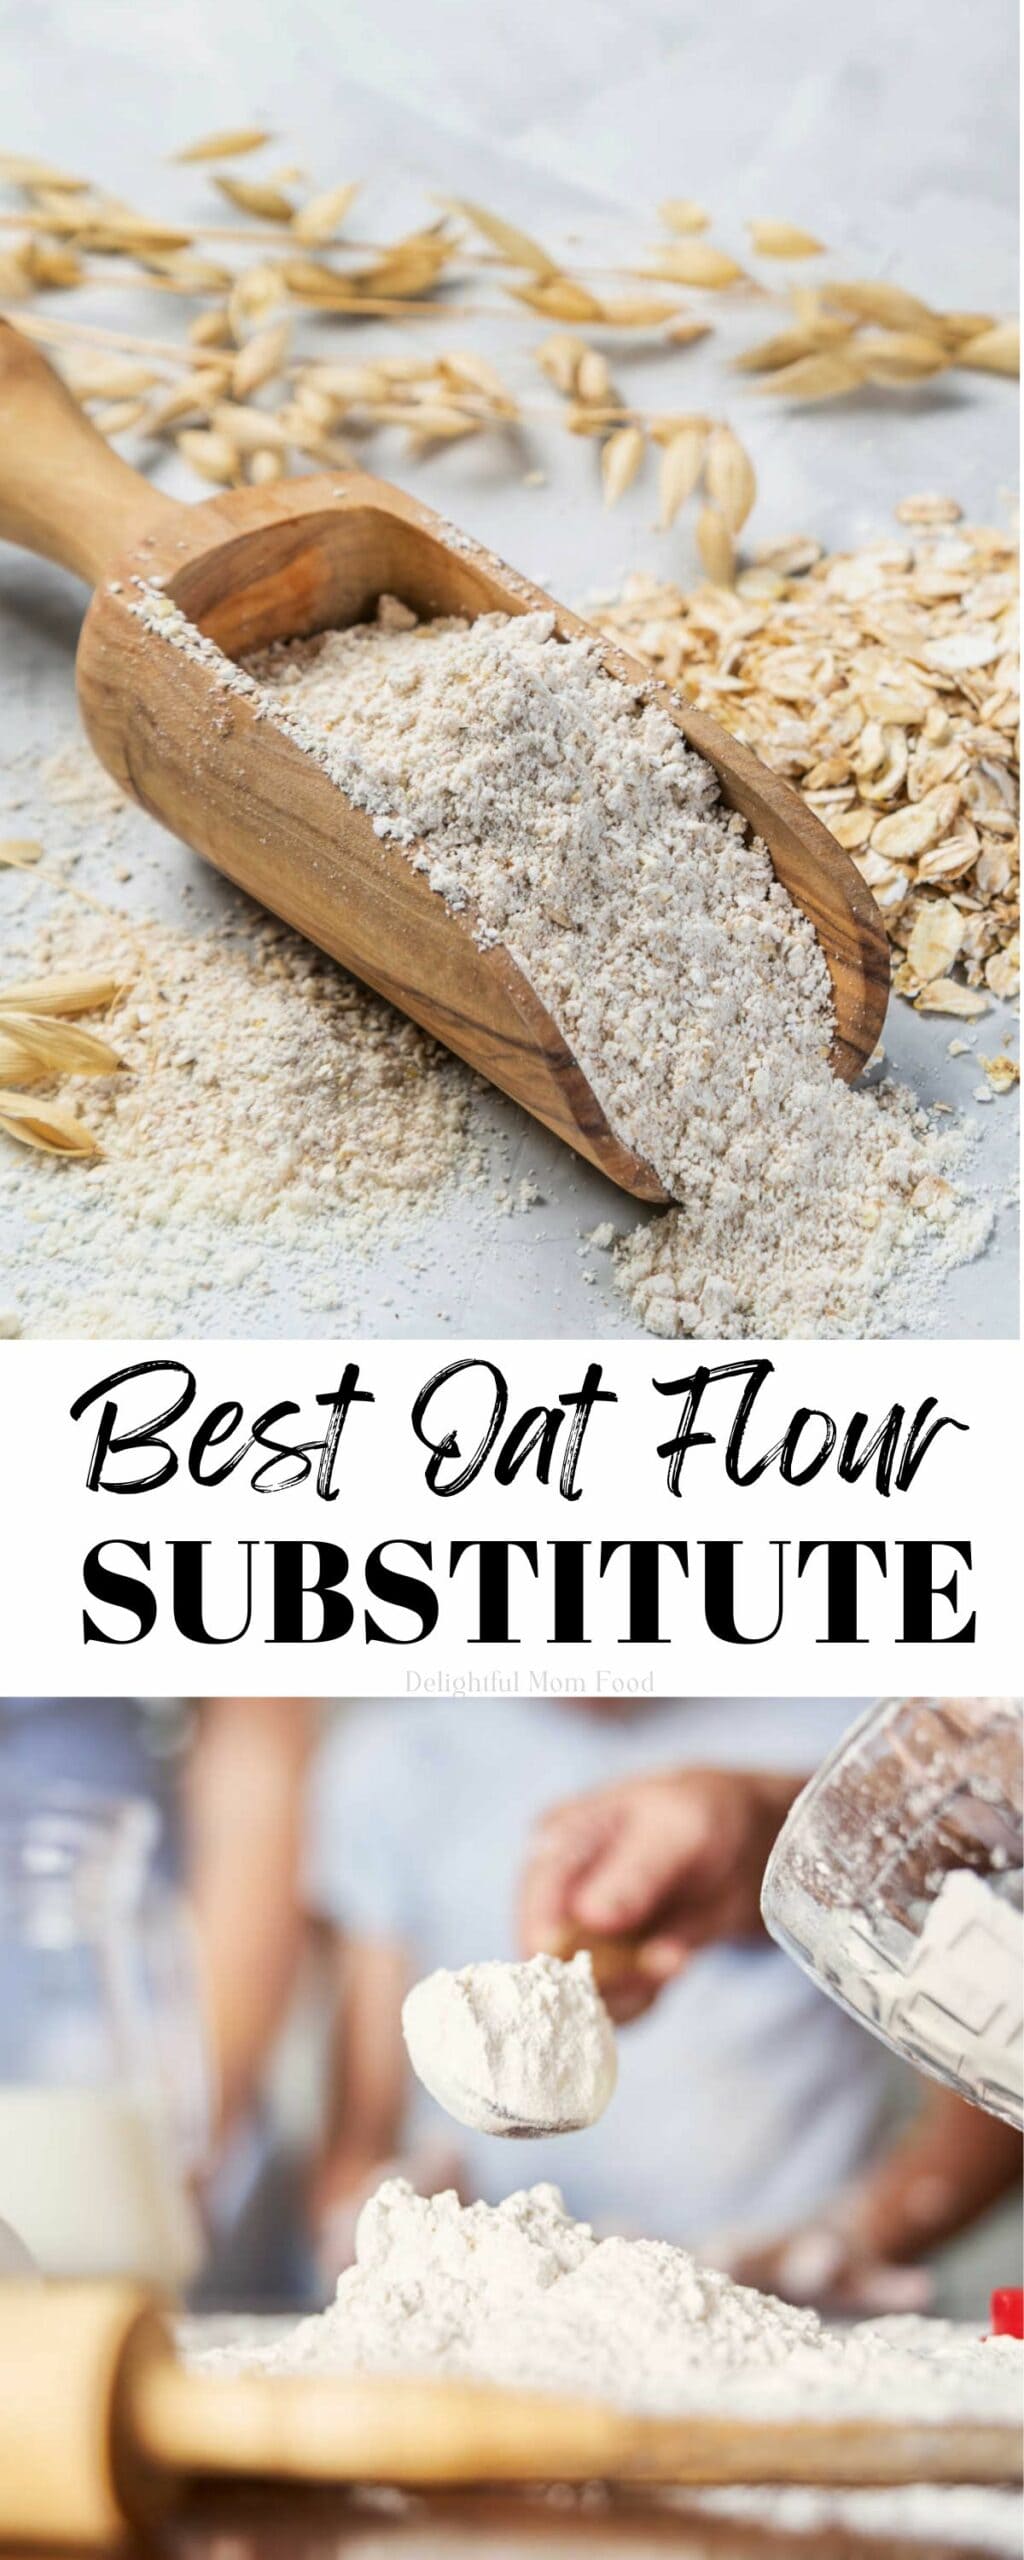 oat flour substitute and alternative